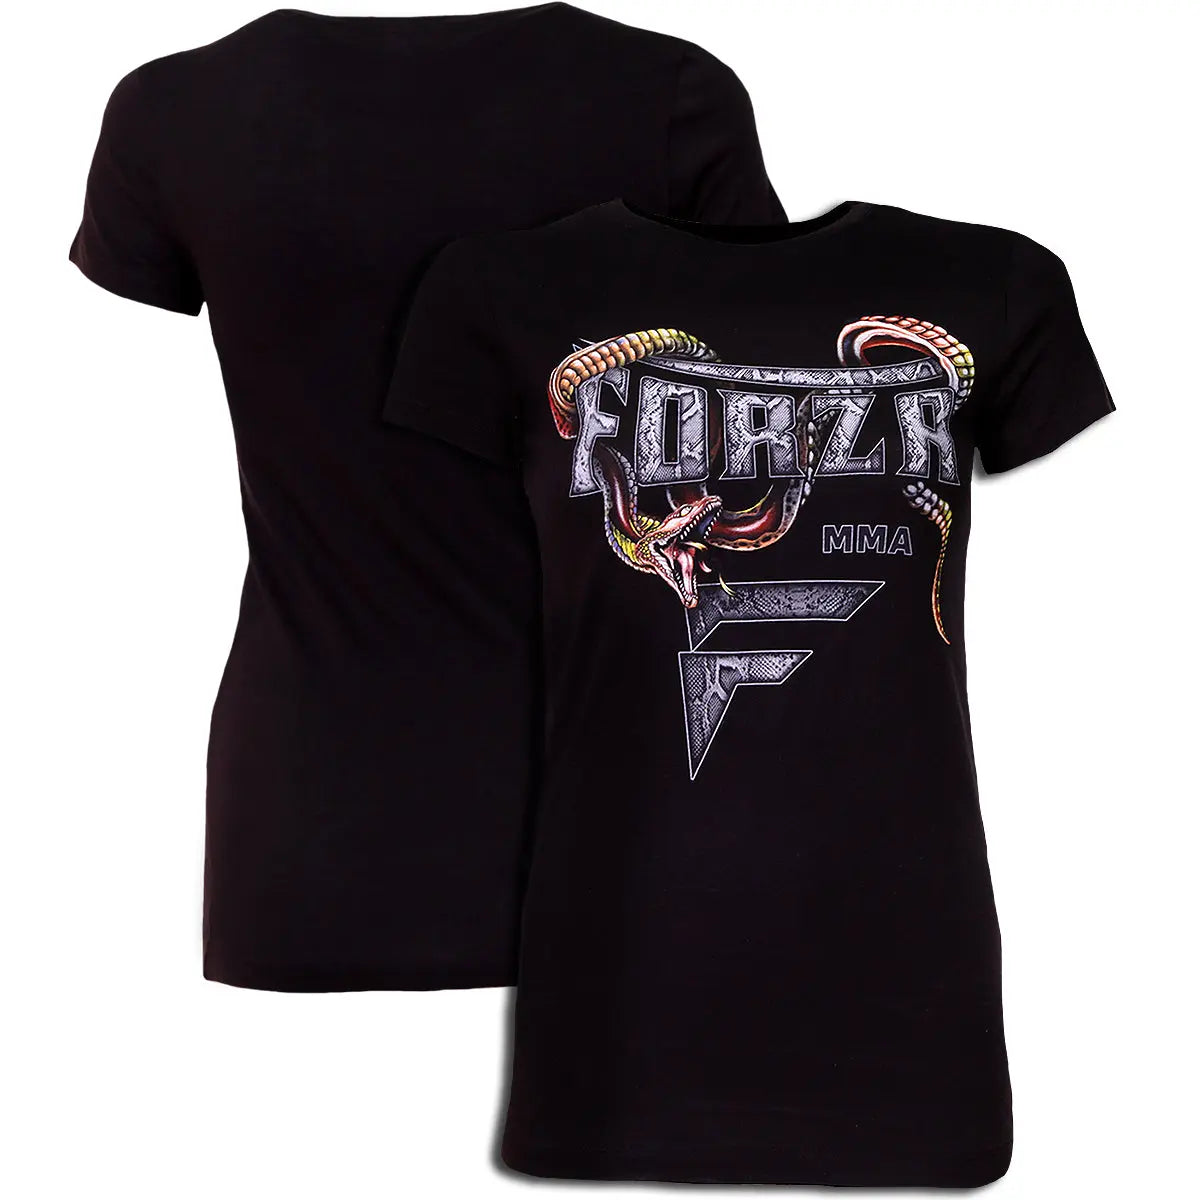 Forza Sports Women's "Slither" MMA T-Shirt - Black Forza Sports